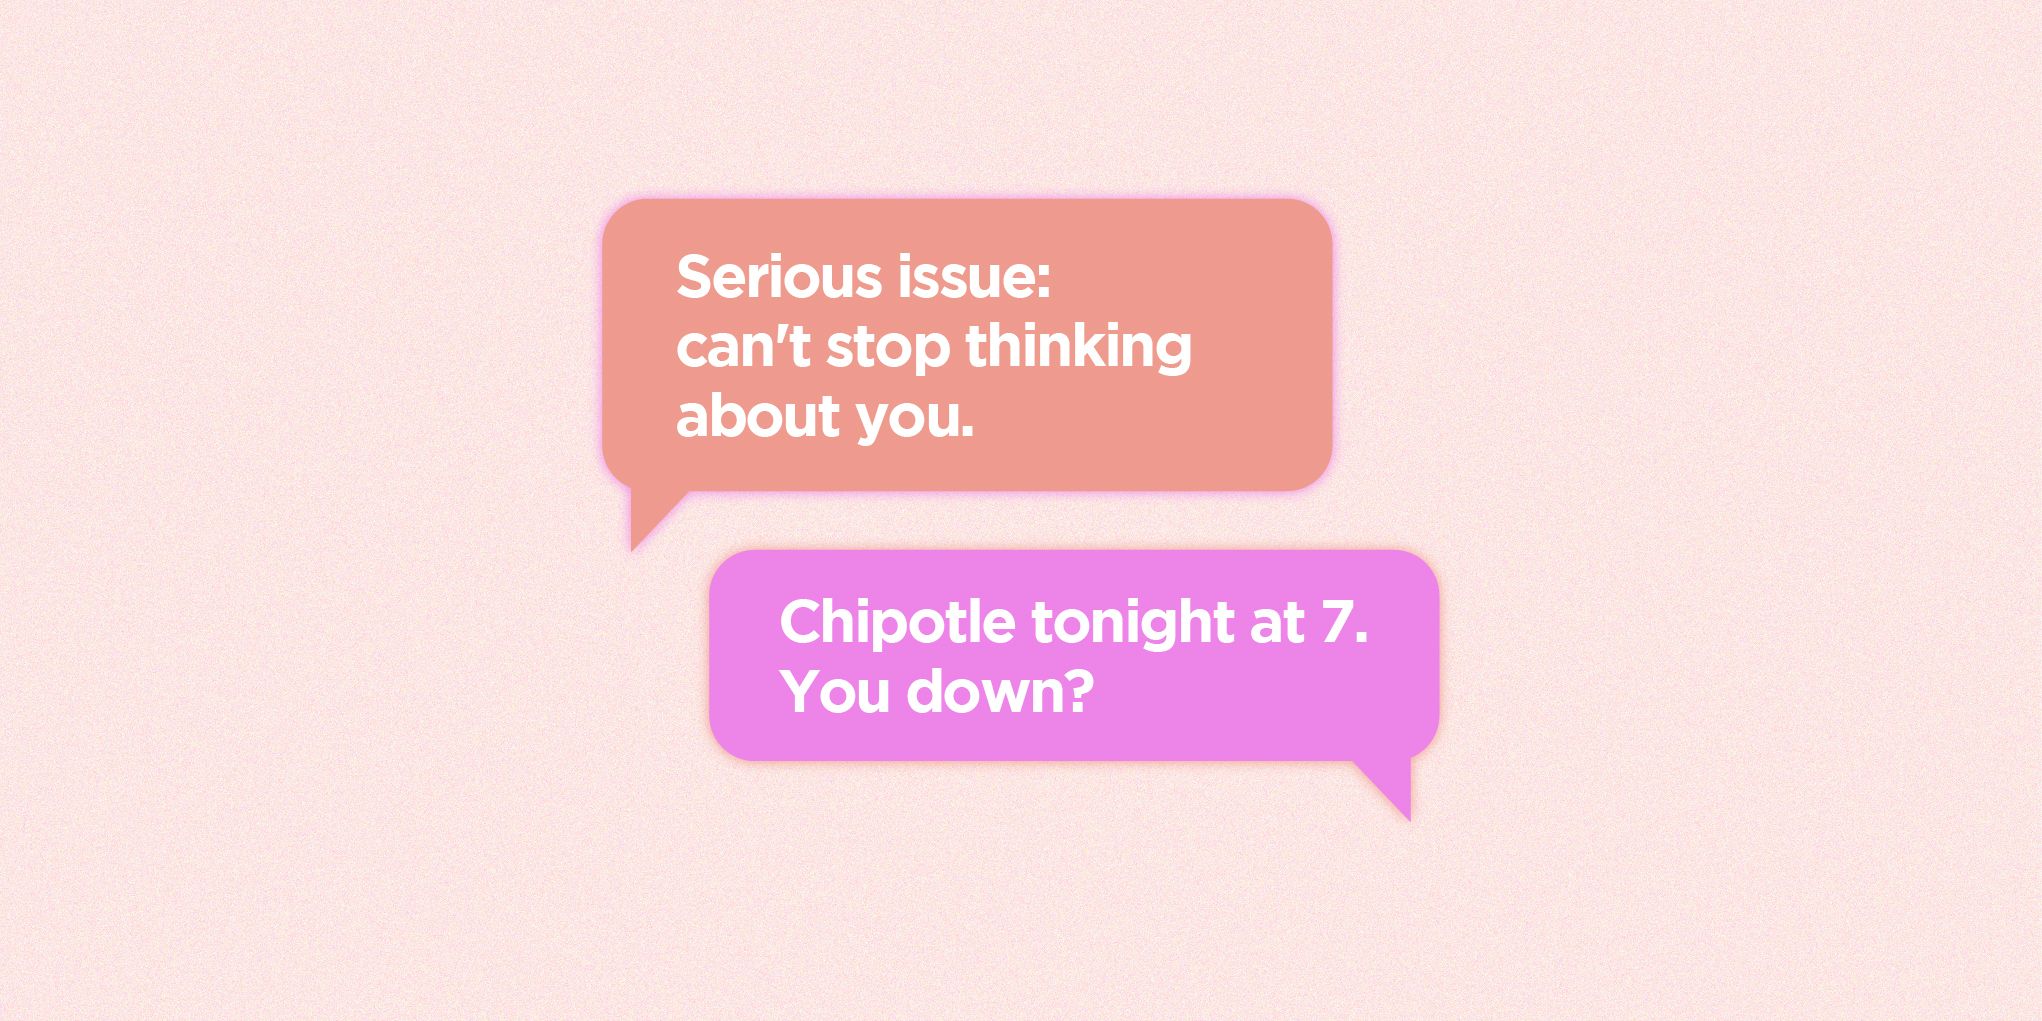 53 Flirty Text Message Ideas - Cute Flirty Texts to Send Your Crush